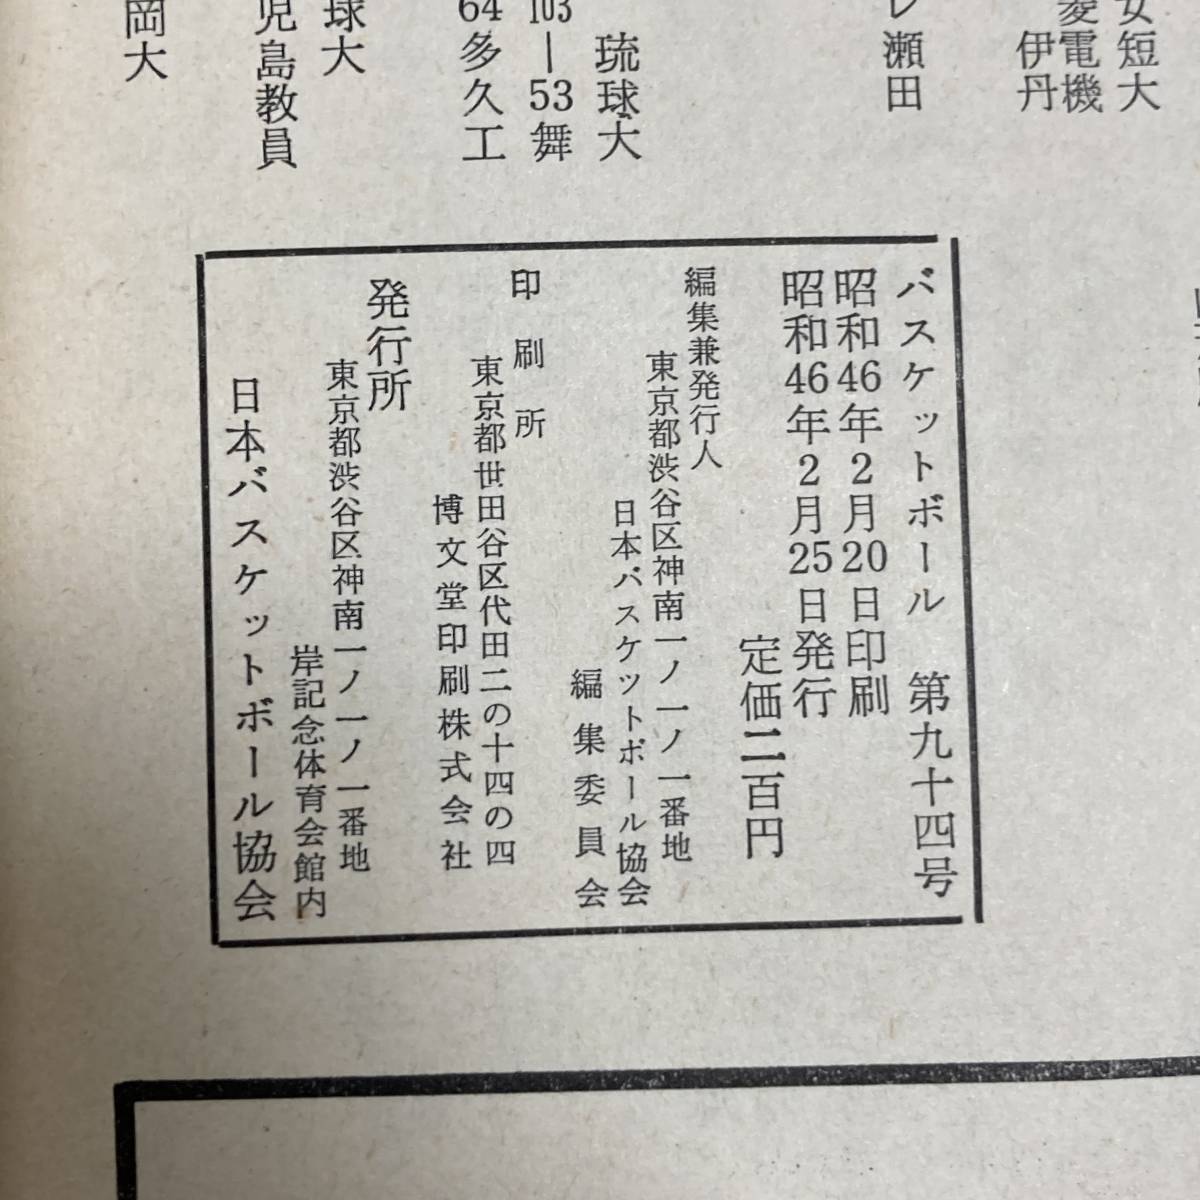 S-3014# баскетбол No.94 Showa 46 год 2 месяц 25 день выпуск (1971 год )# соревнование результат оценка # Япония баскетбол ассоциация 